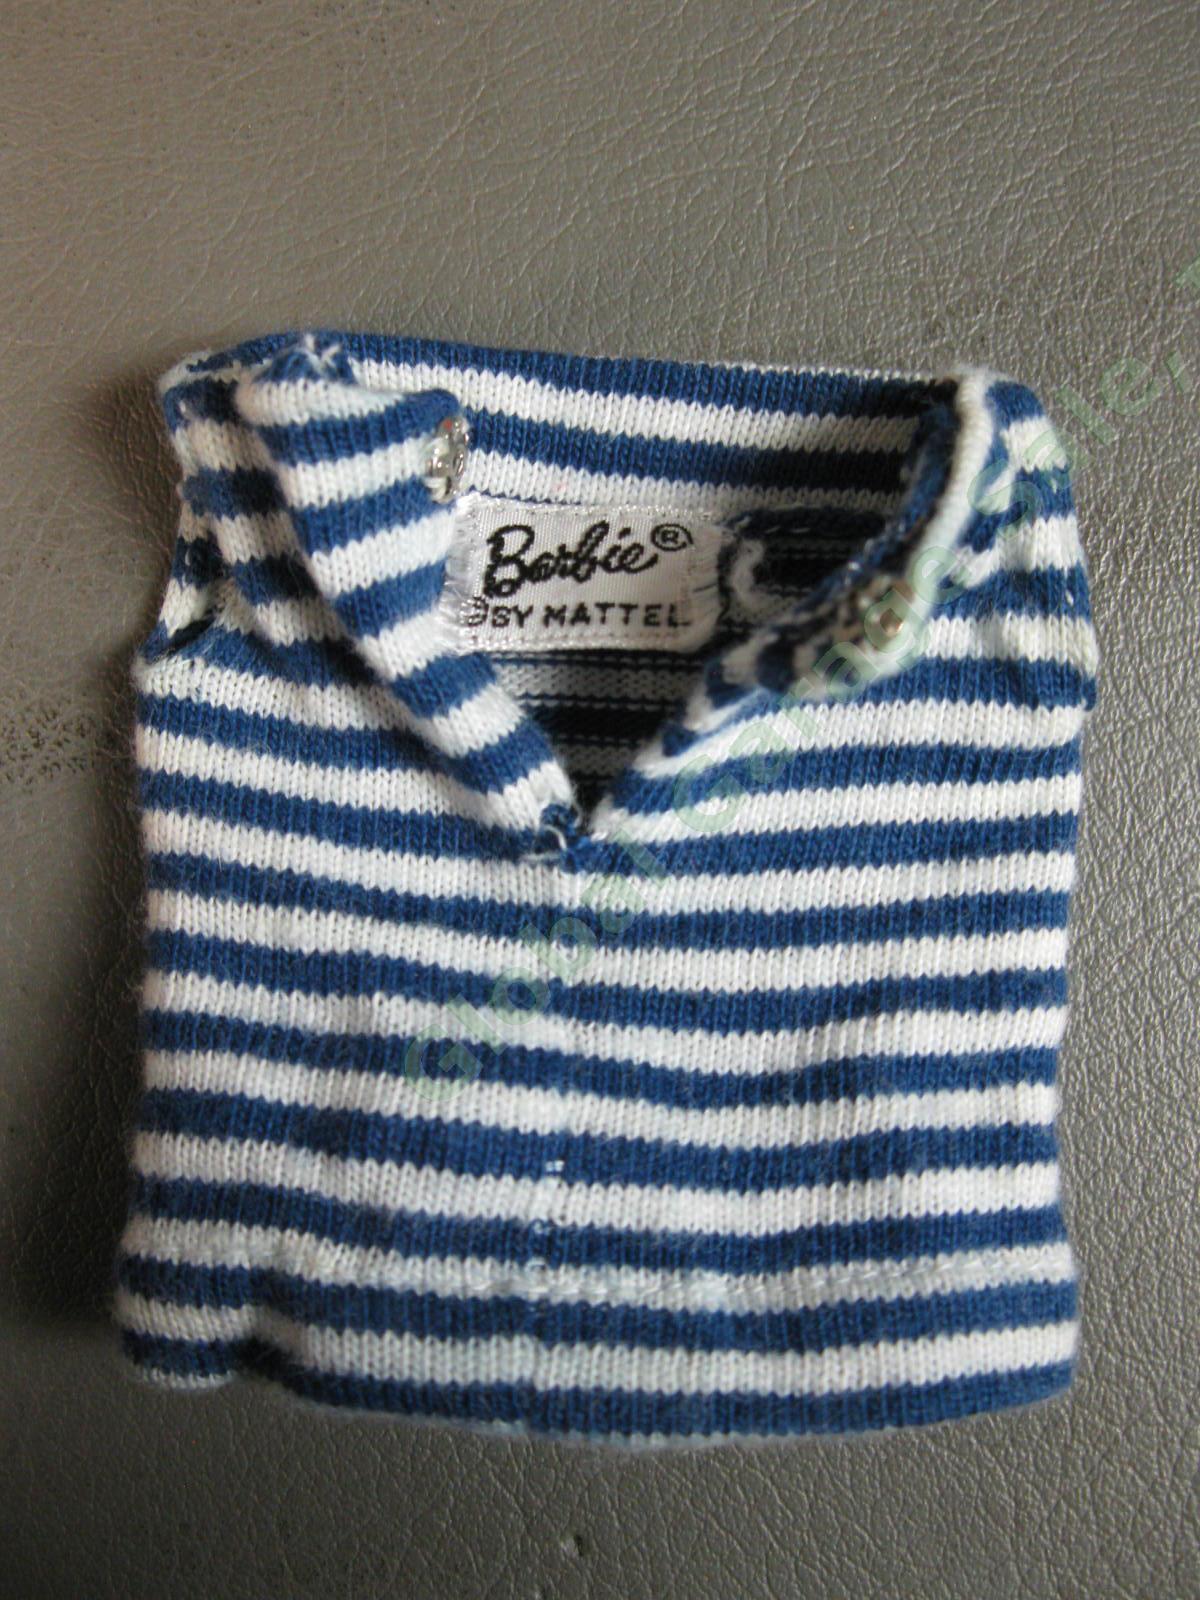 ORIGINAL VTG 1961 Barbie 963 Resort Set Clothes Outfit Coat Shirt Shorts Hat NR 6